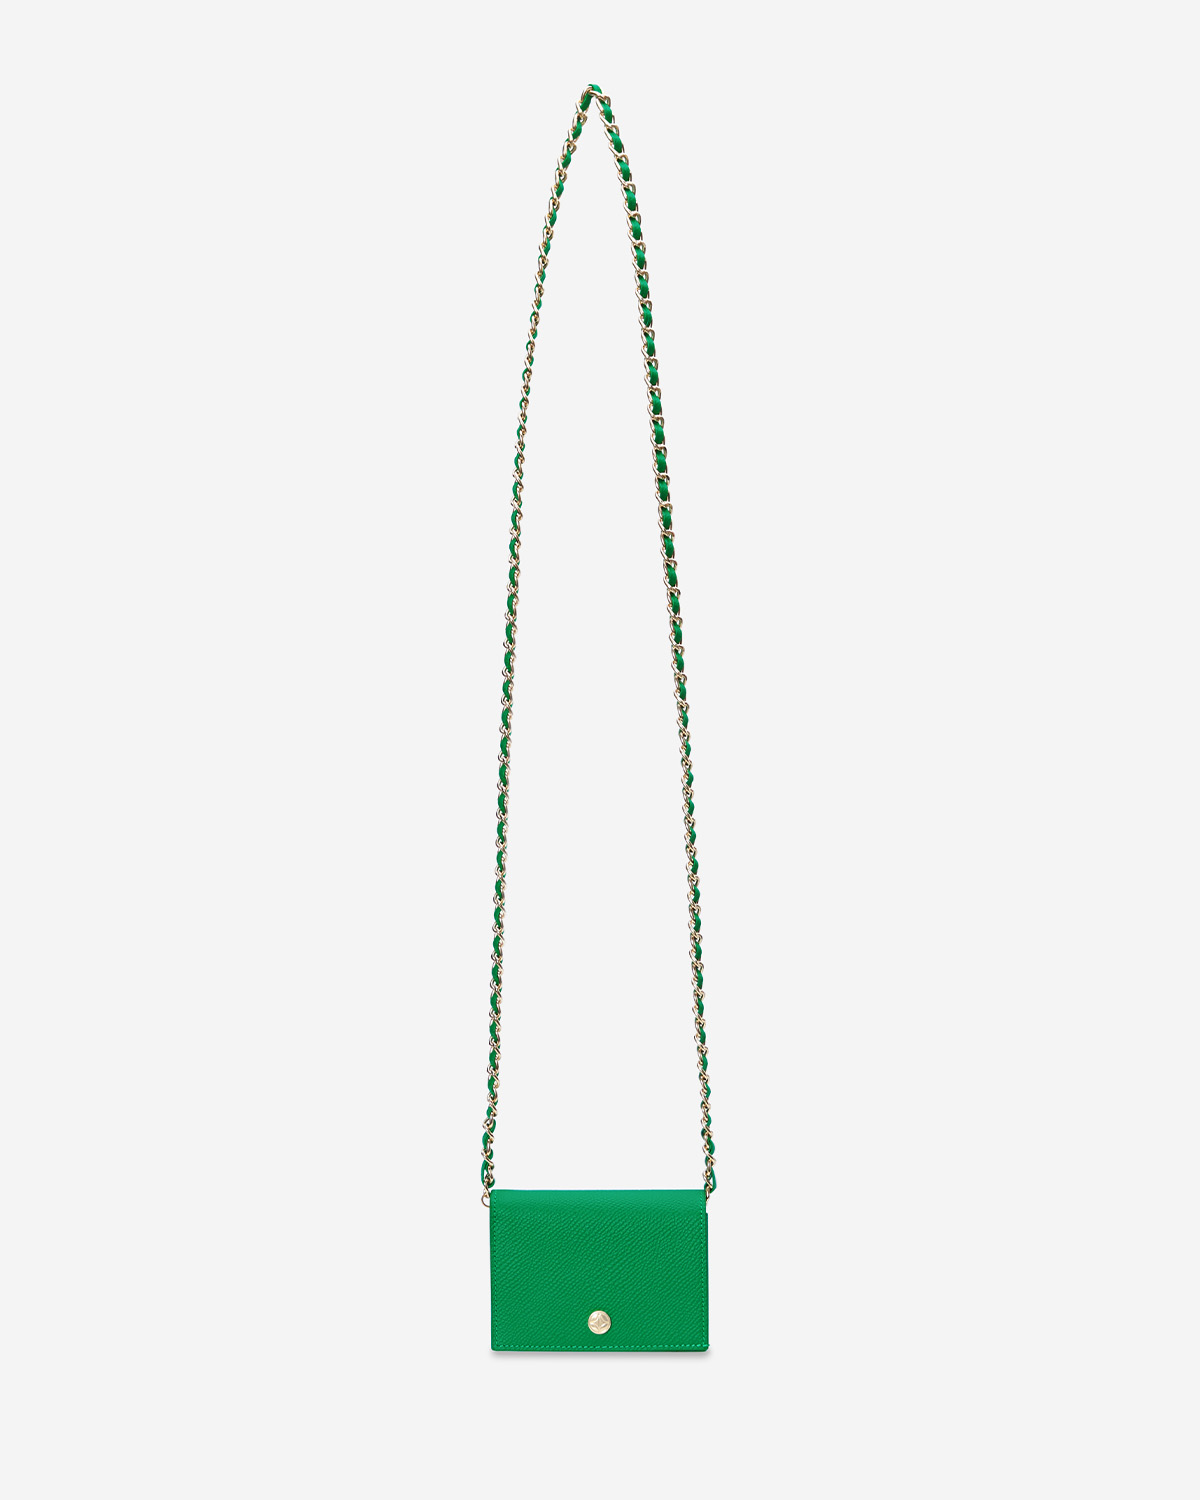 VERA Emily Flap Wallet with Leather Braided Gold Chain in Confident Green กระเป๋าสตางค์หนังแท้ แบบเปิดฝา พร้อมสายโซ่สีทองร้อยหนัง สีเขียว